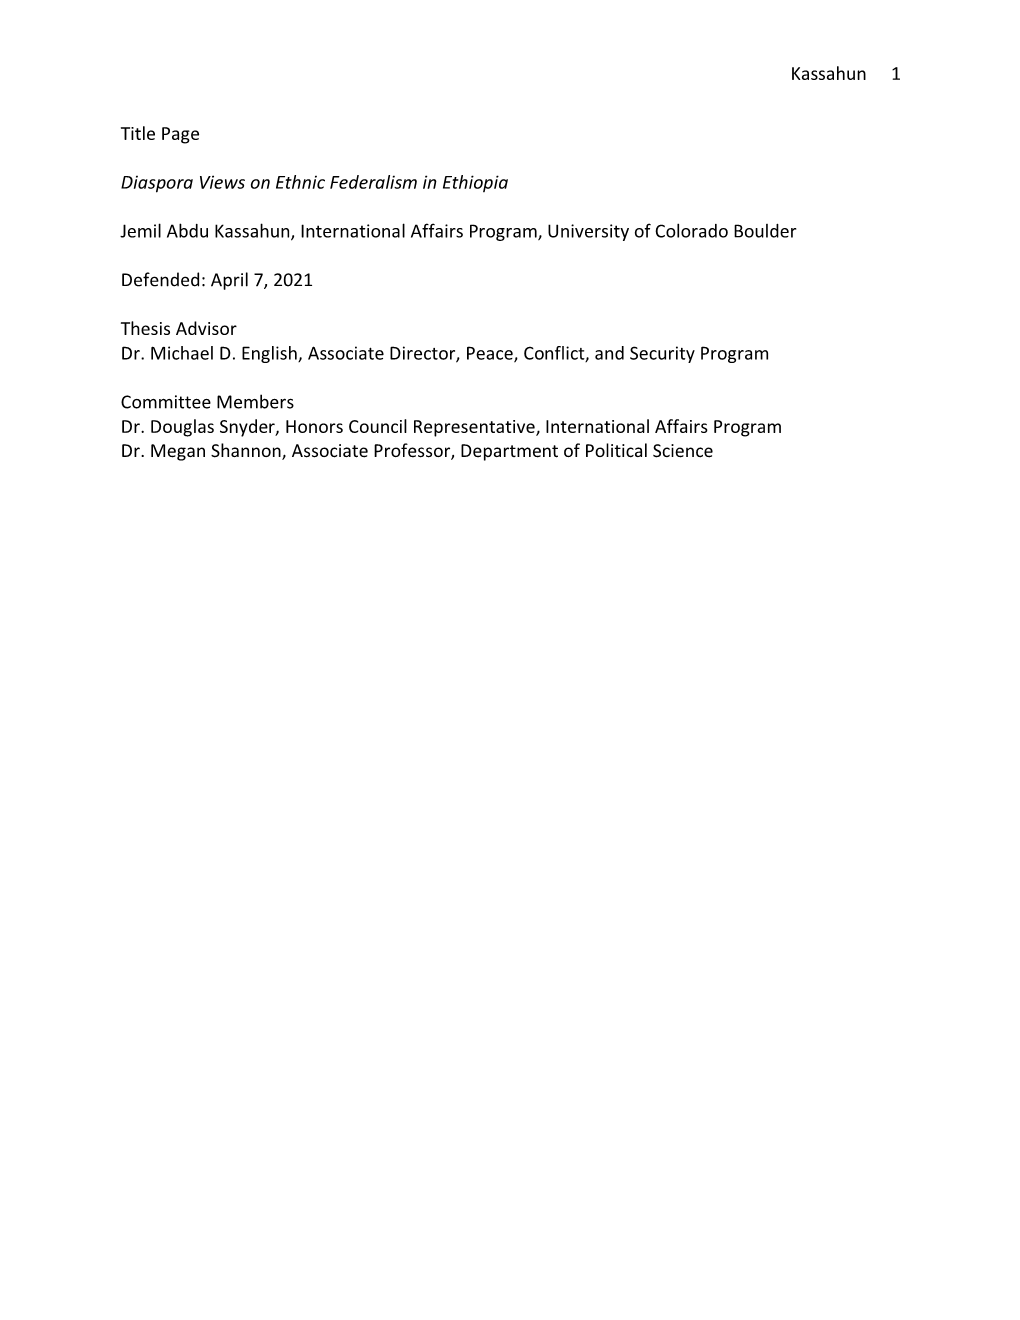 Kassahun 1 Title Page Diaspora Views on Ethnic Federalism In